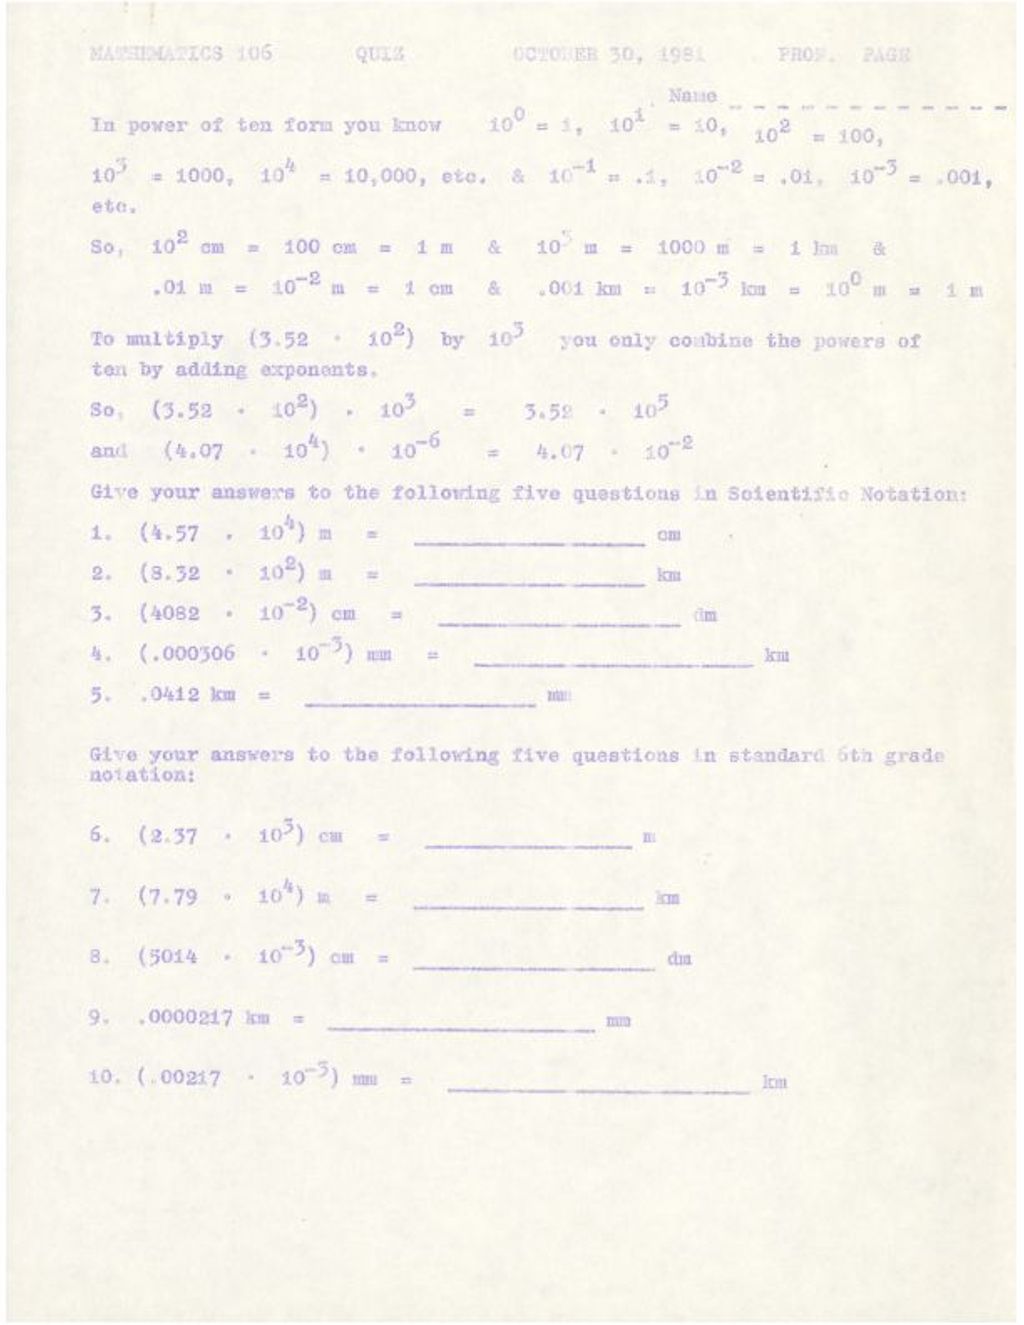 Math 106 Quiz (scientific notation) Oct. 1981